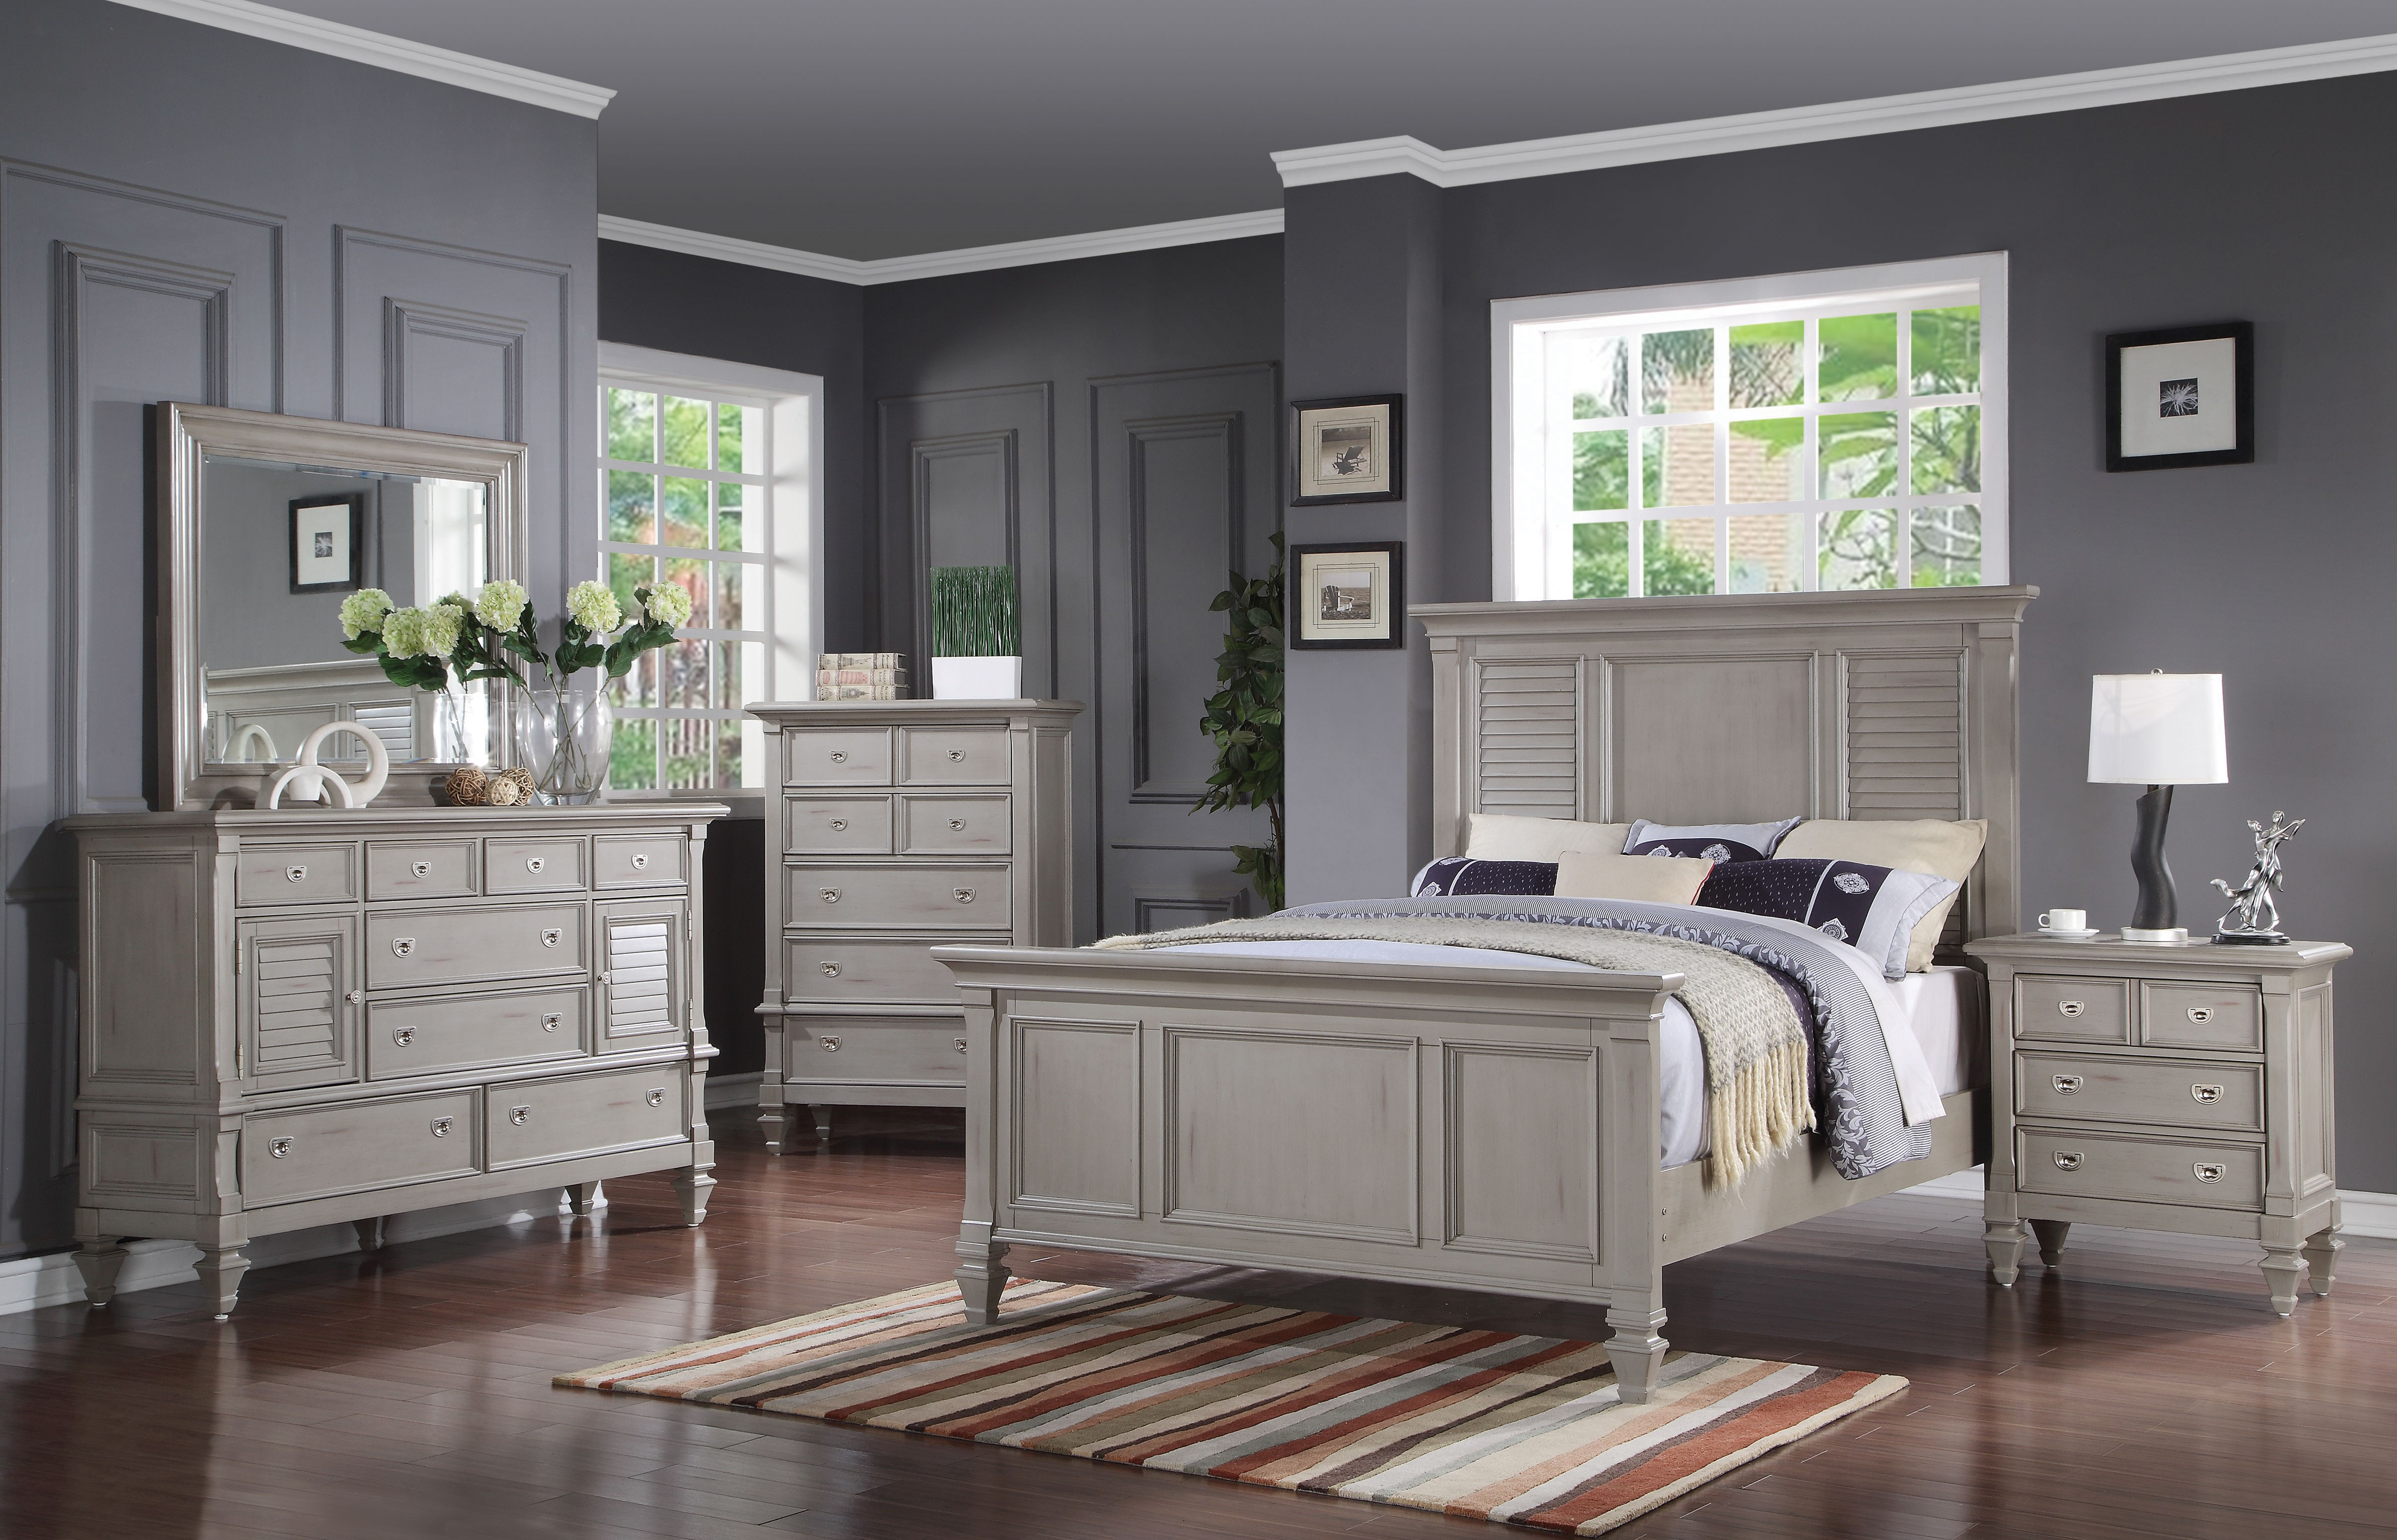 pale grey painted bedroom furniture